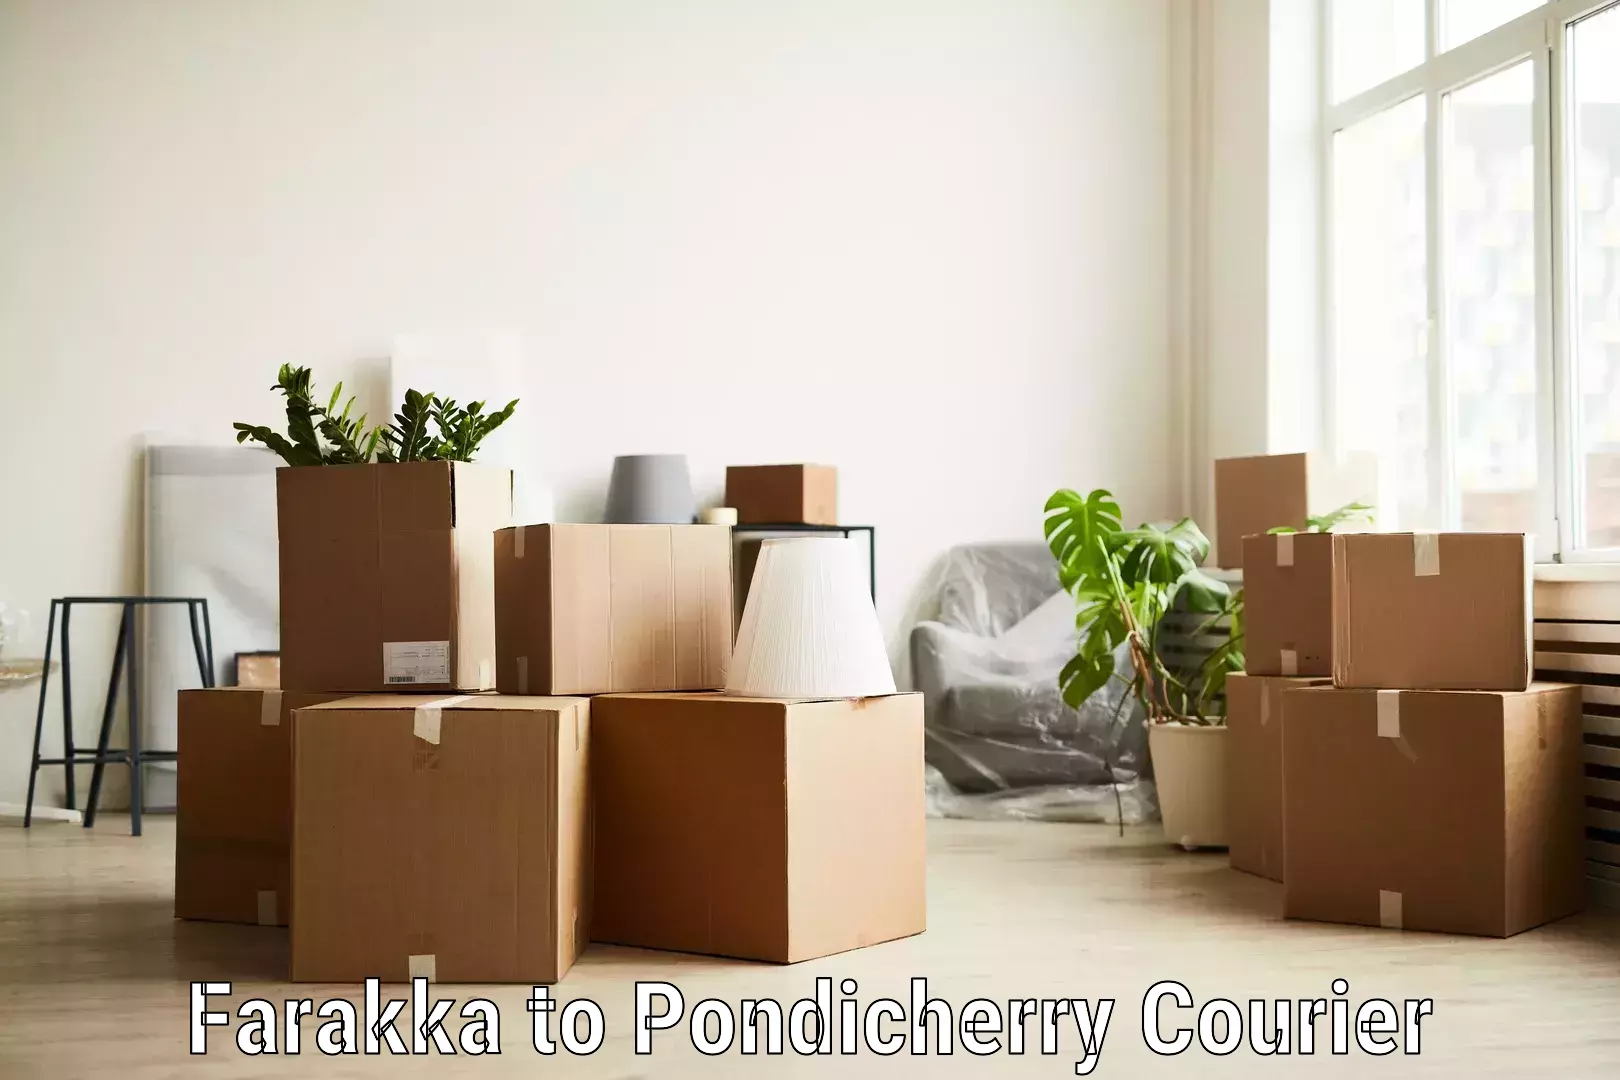 Efficient order fulfillment Farakka to Pondicherry